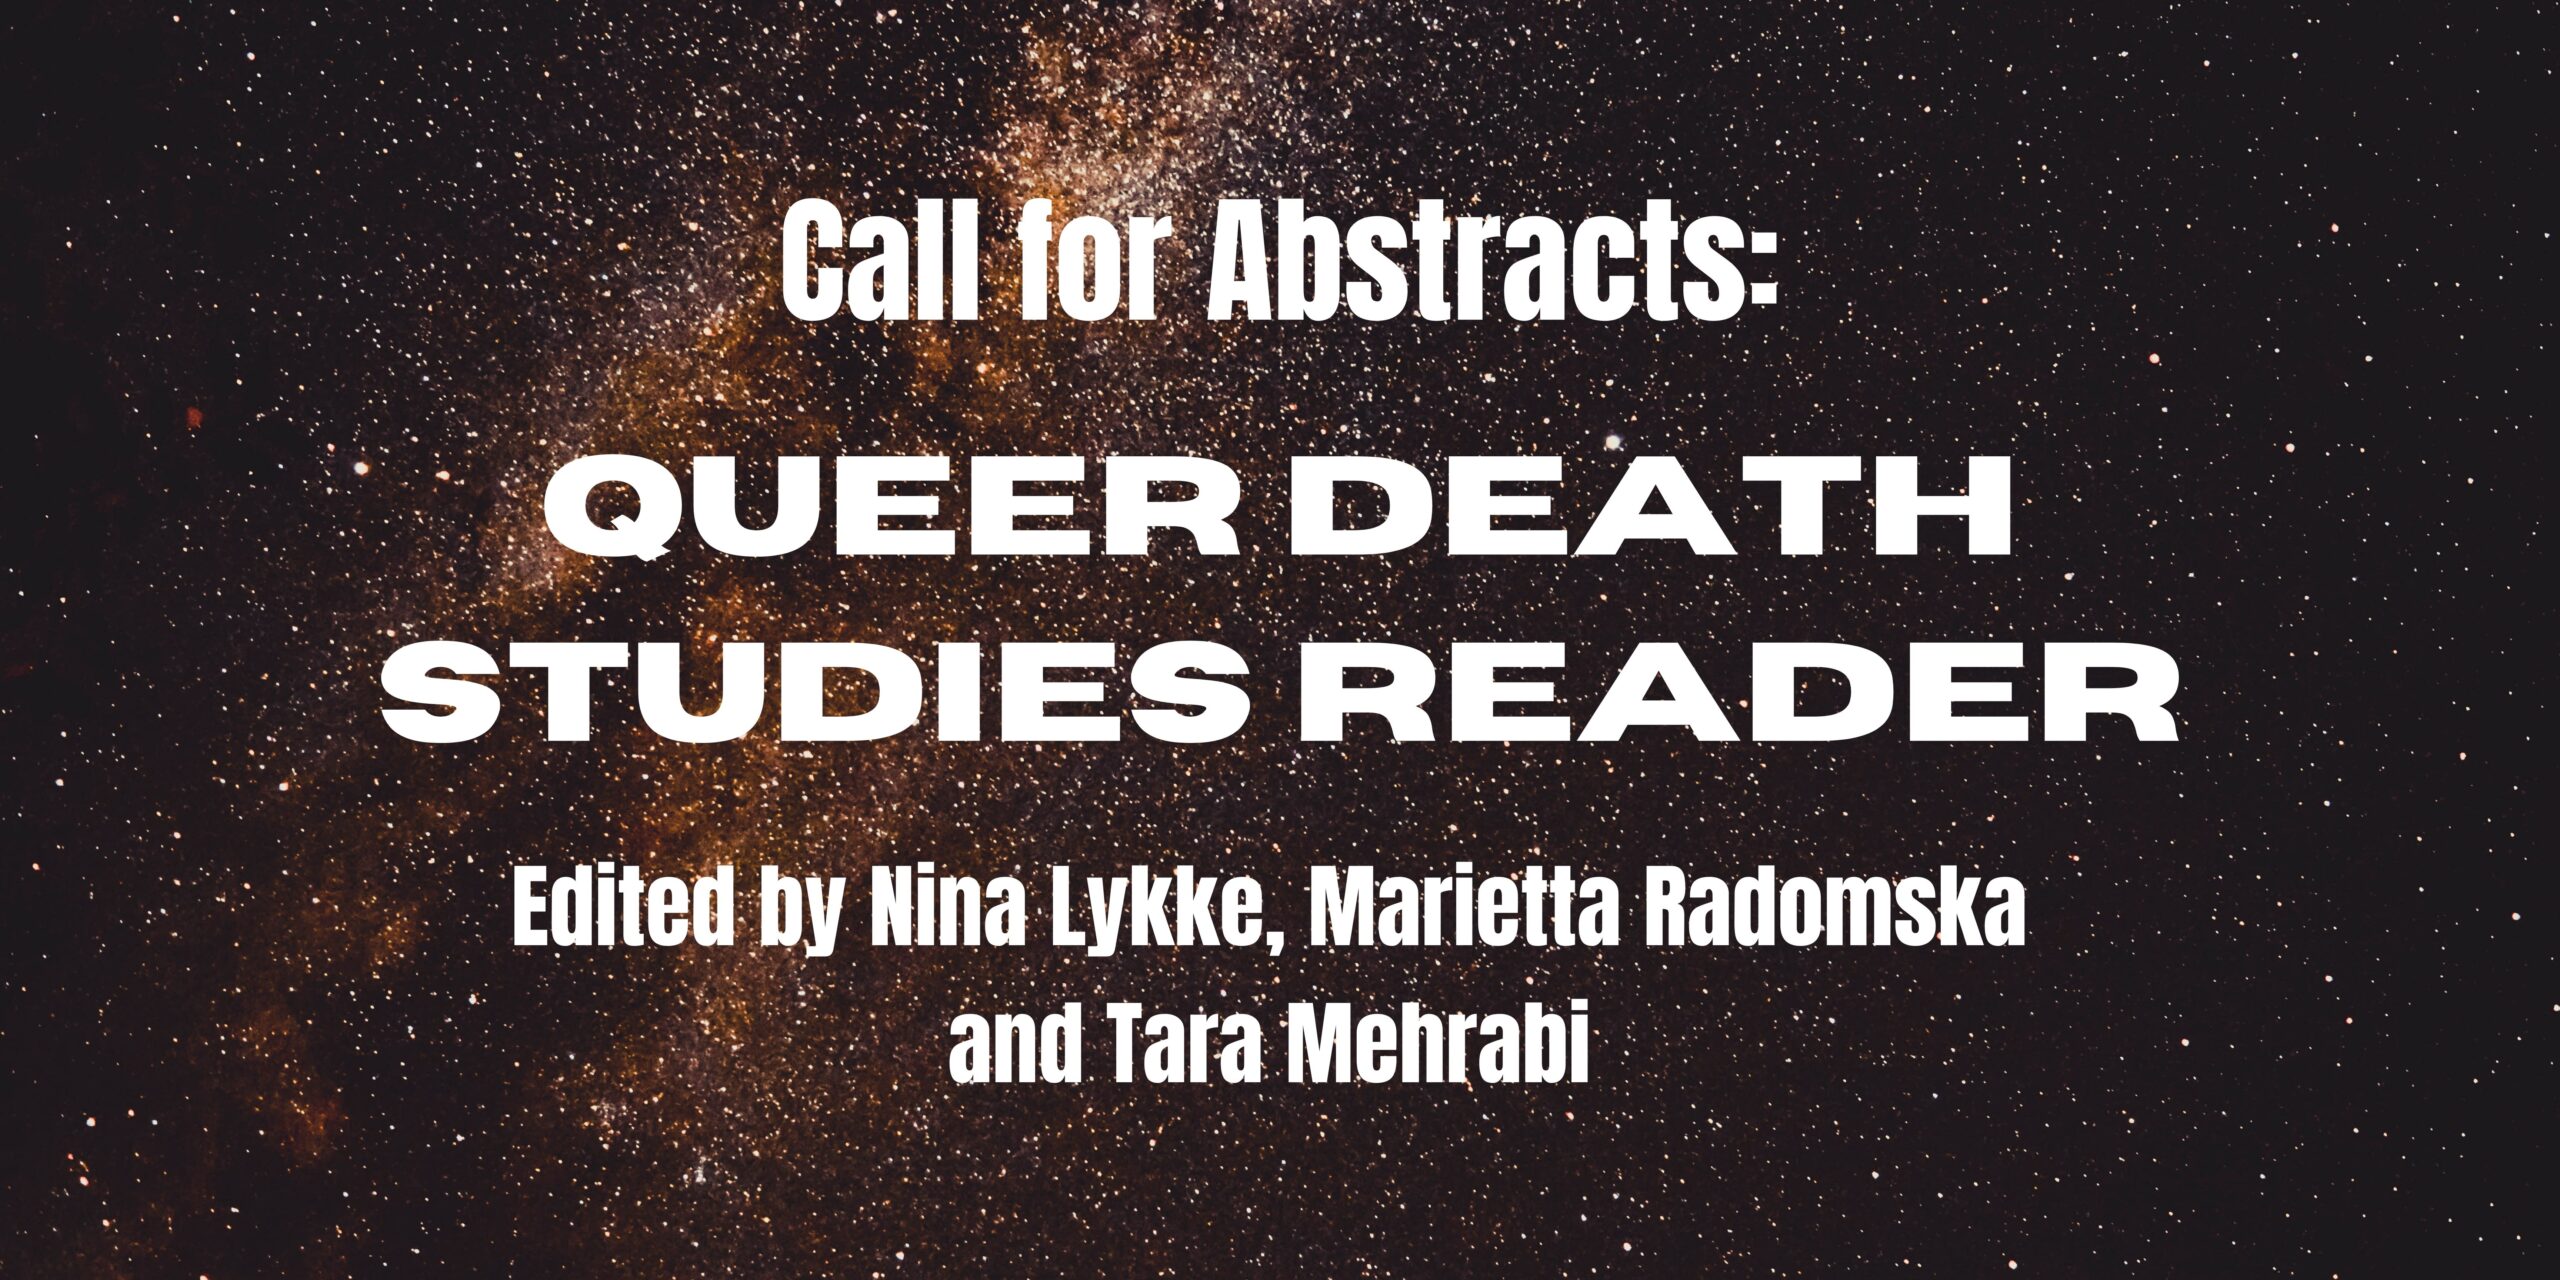 Call for abstracts: Queer Death Studies Reader. Edited by Nina Lykke, Marietta Radomska and Tara Mehrabi